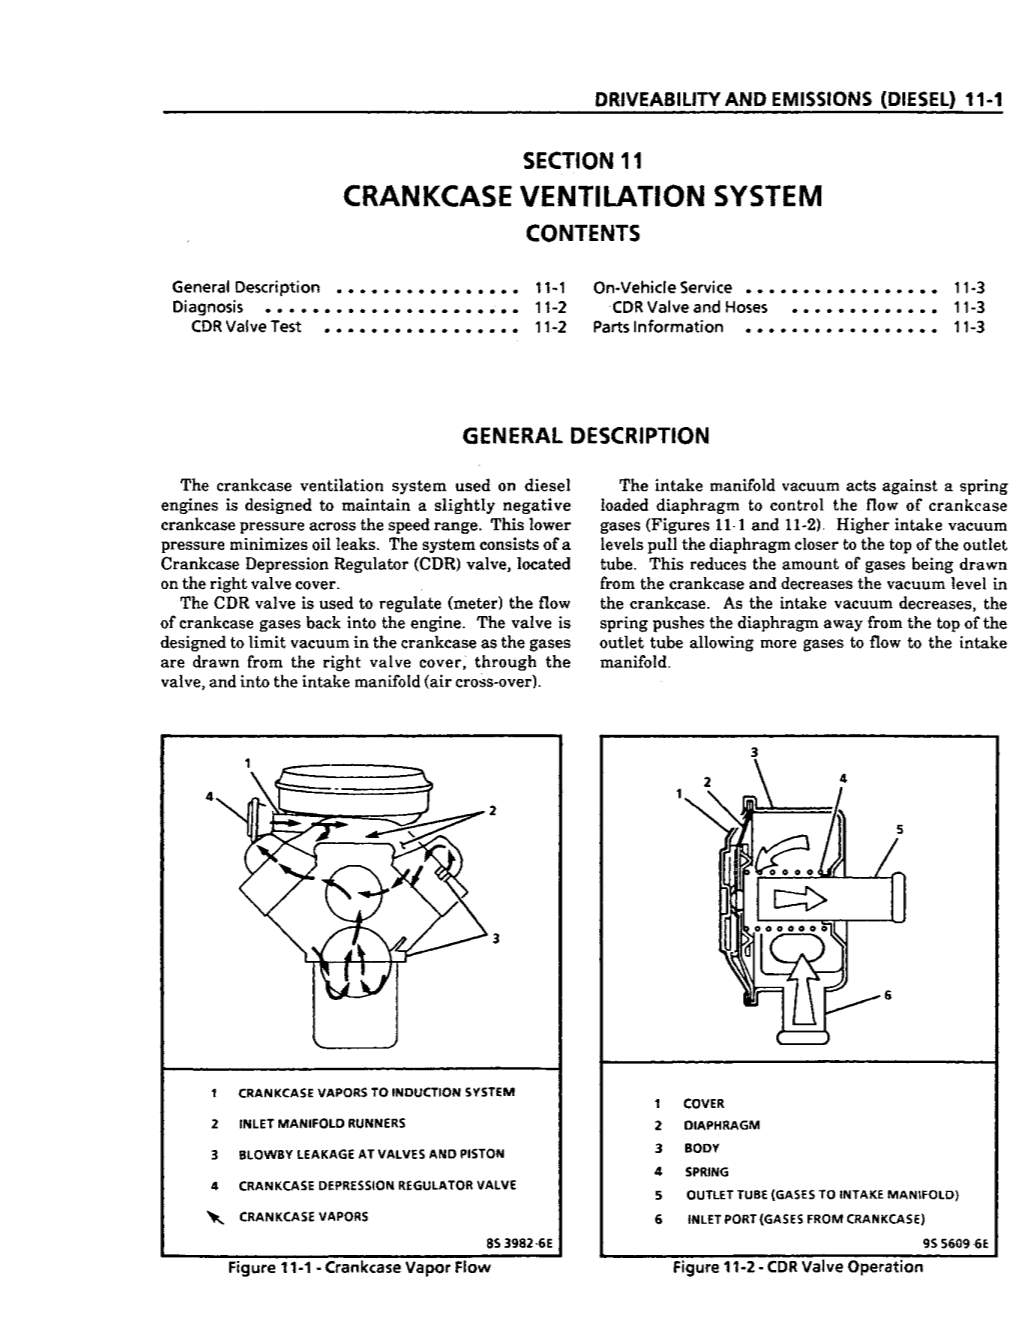 Crankcase Ventilation System Contents